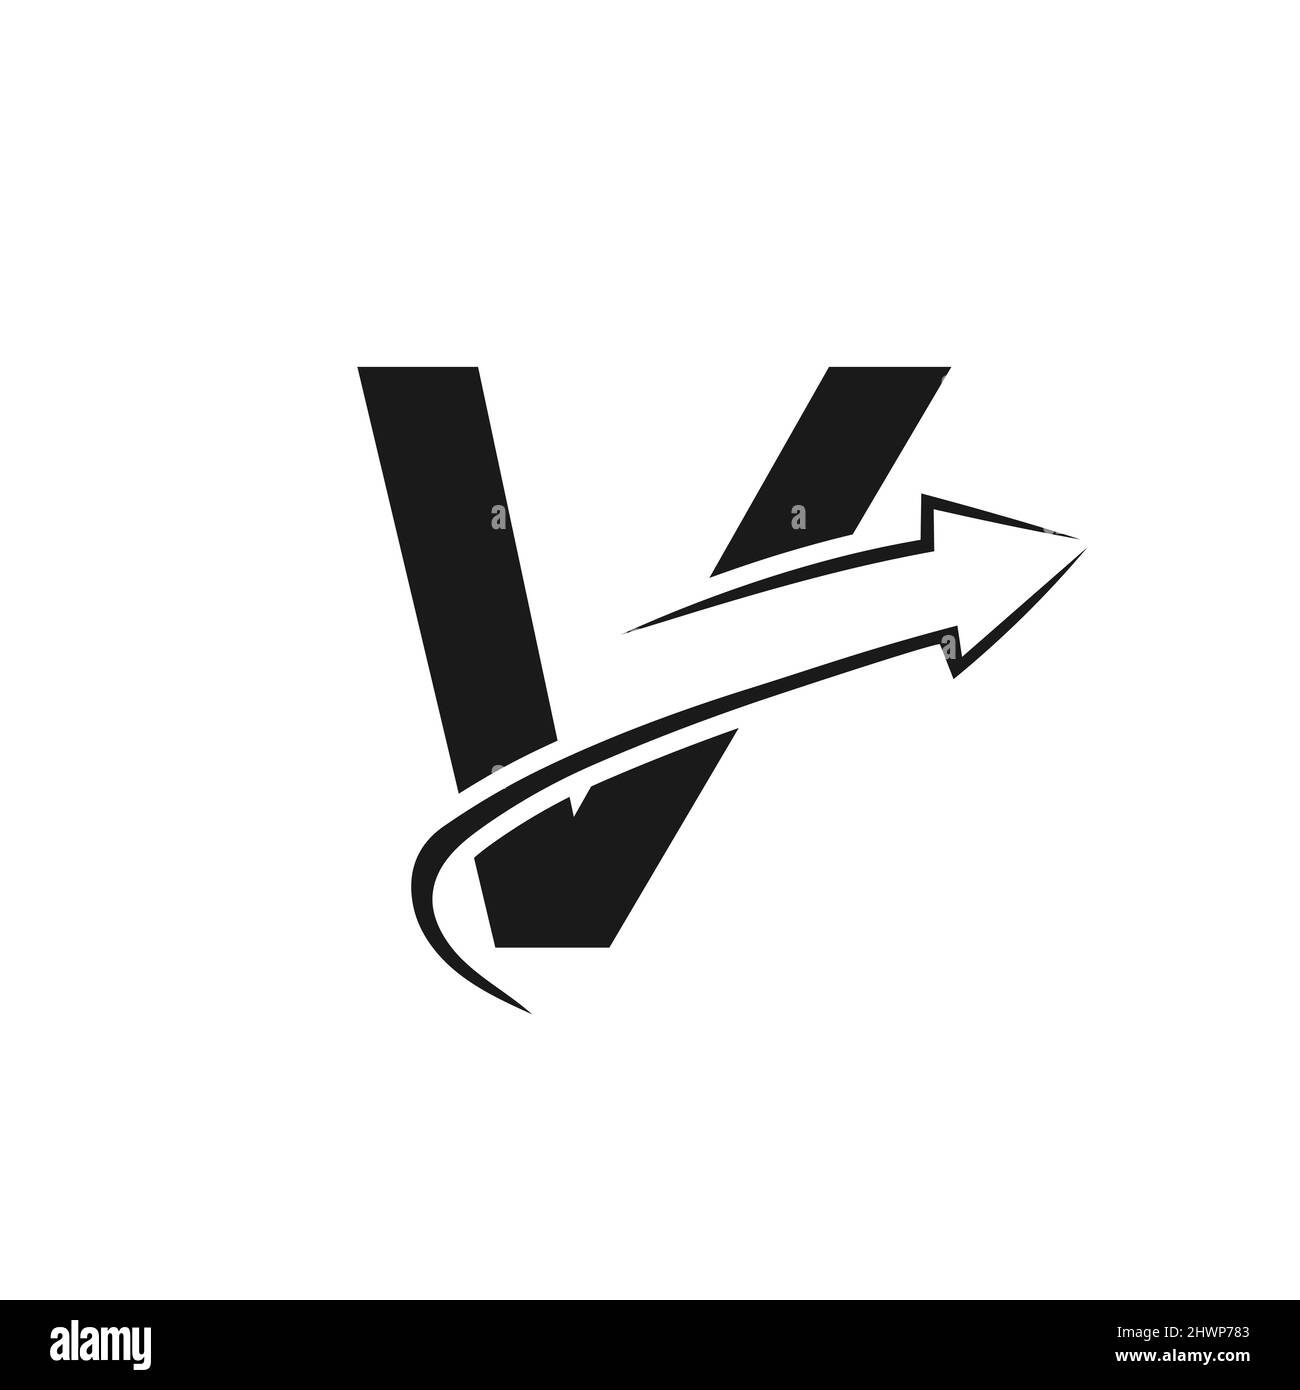 Letter v logo Black and White Stock Photos & Images - Alamy